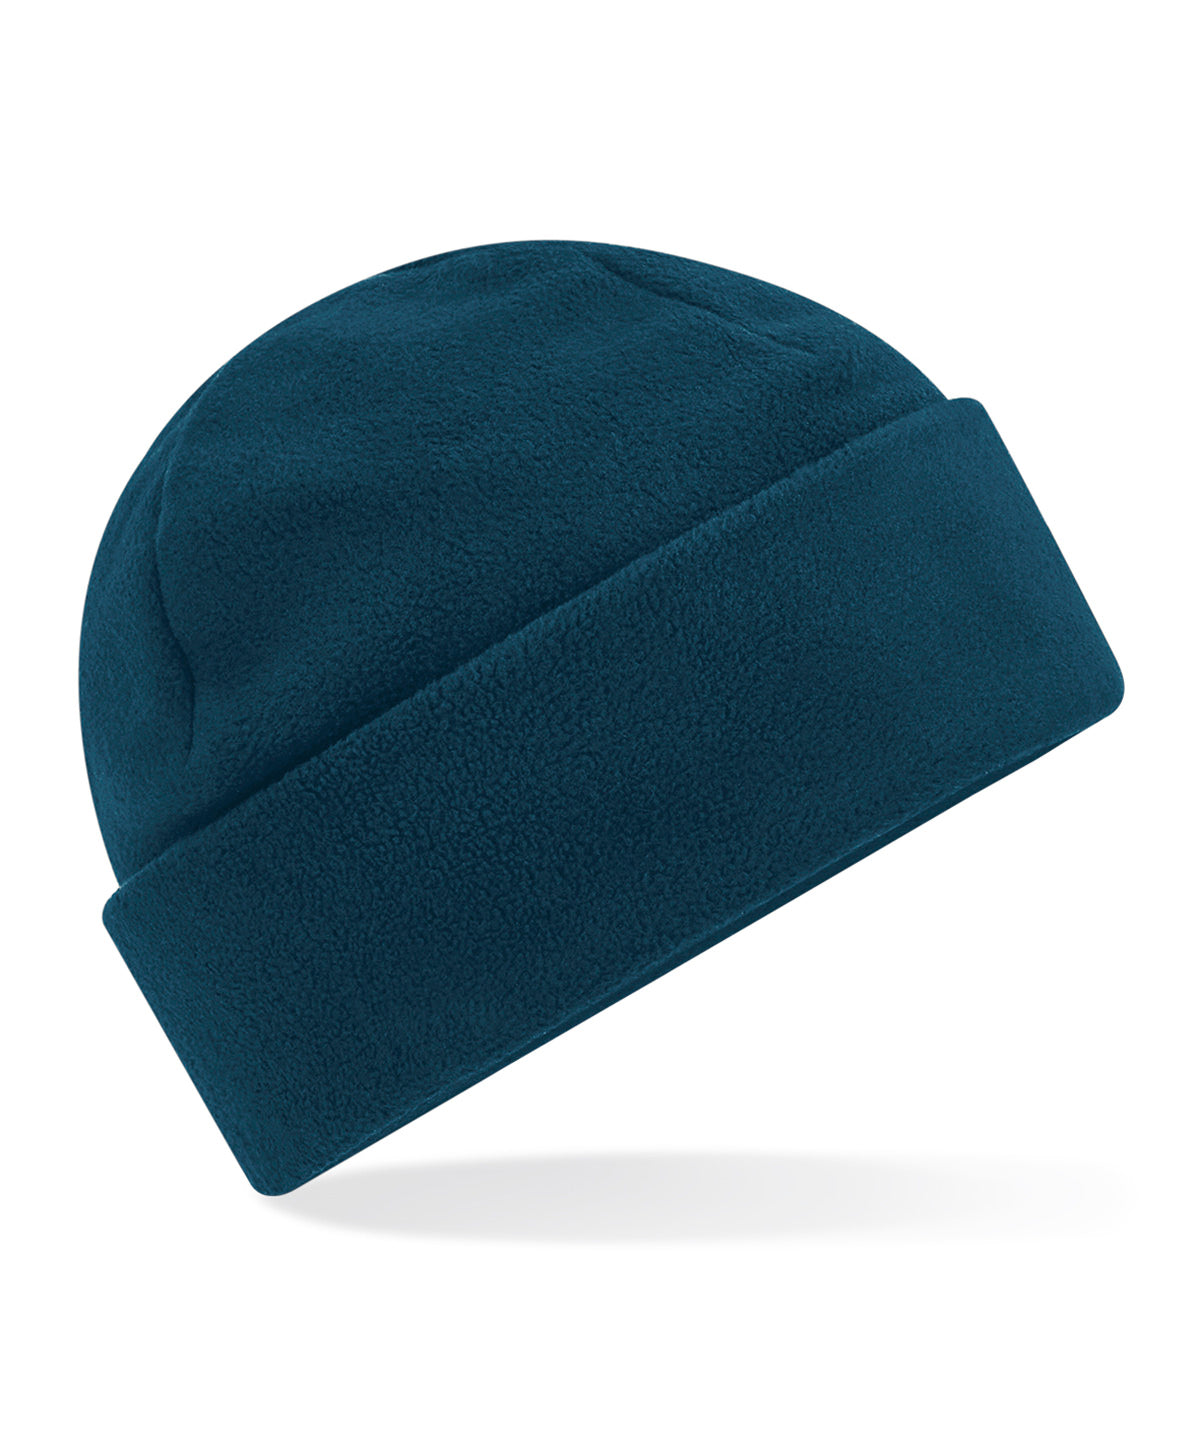 Personalised Hats - Dark Blue Beechfield Recycled fleece cuffed beanie